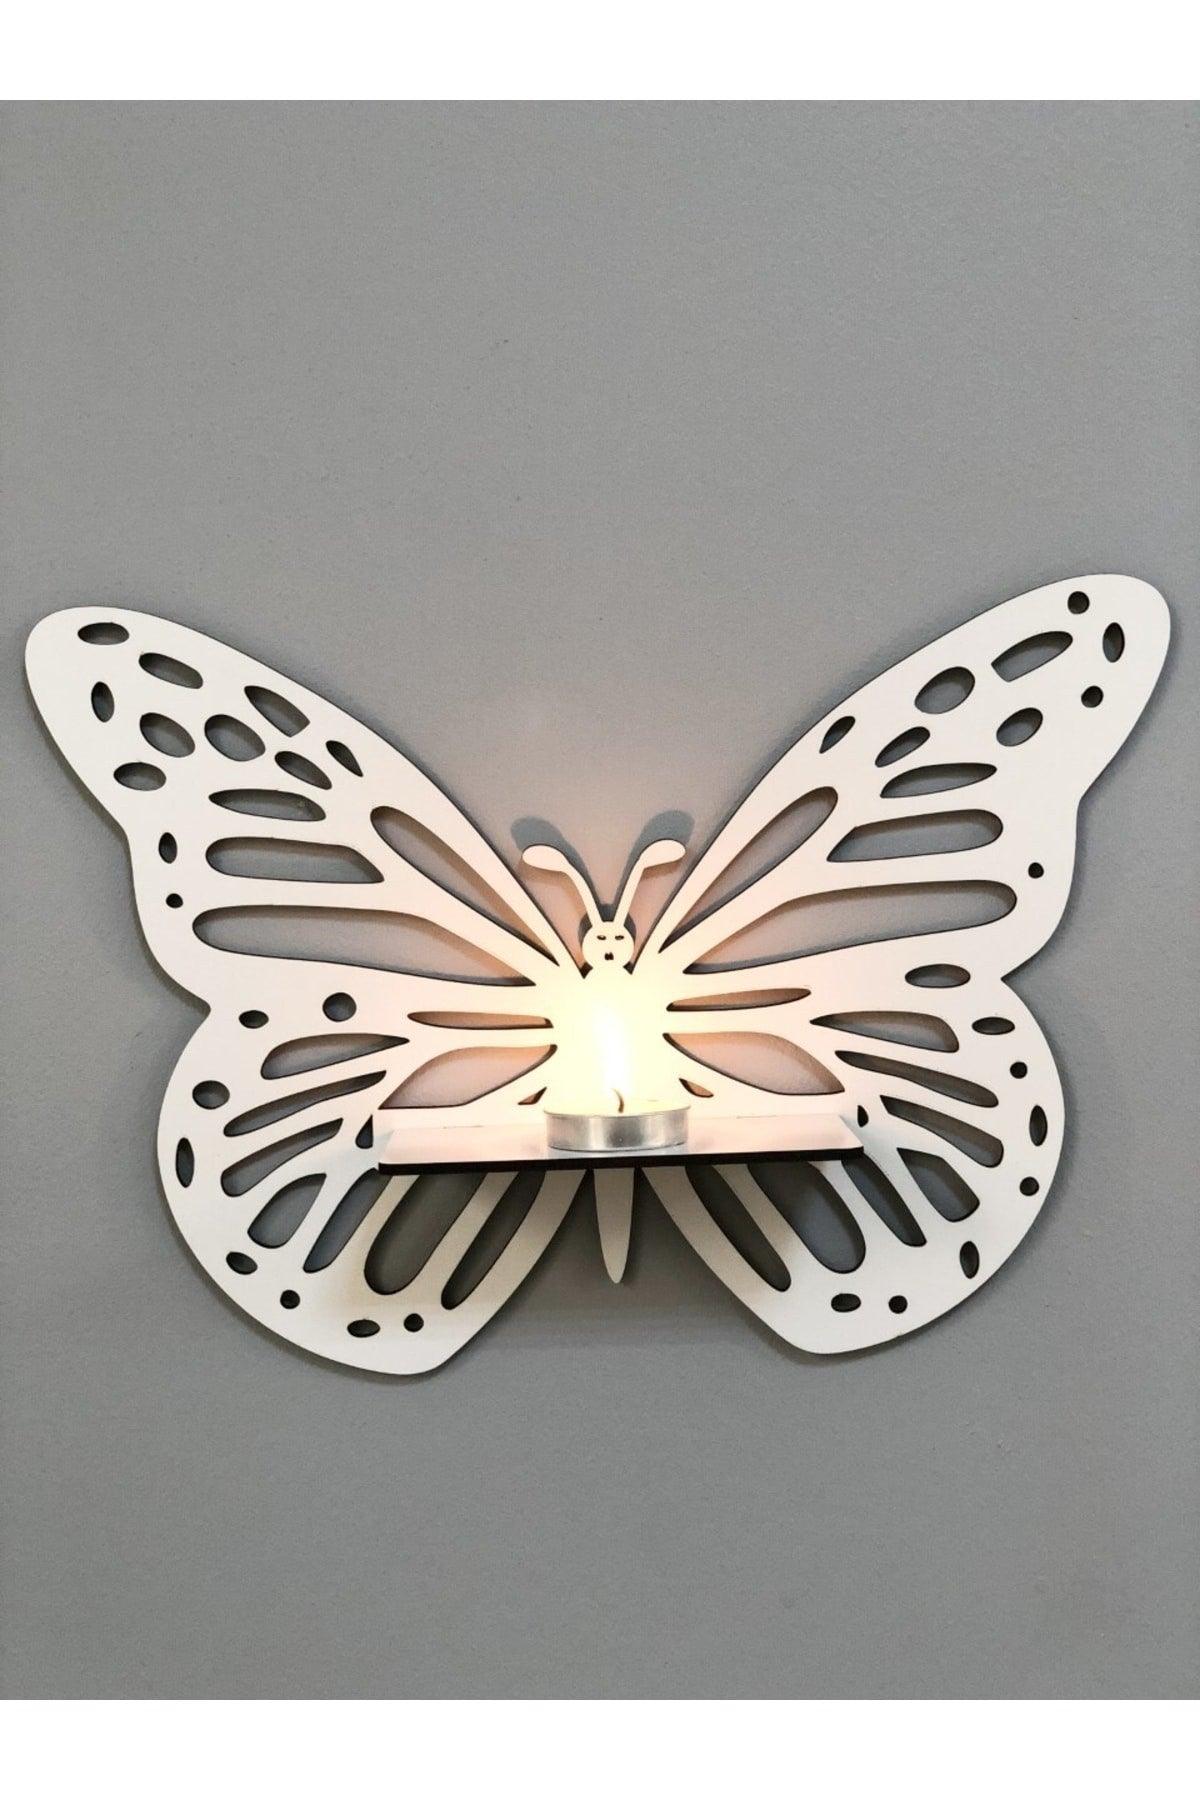 Decorative White Butterfly Wall Shelf Set of 3 - Swordslife